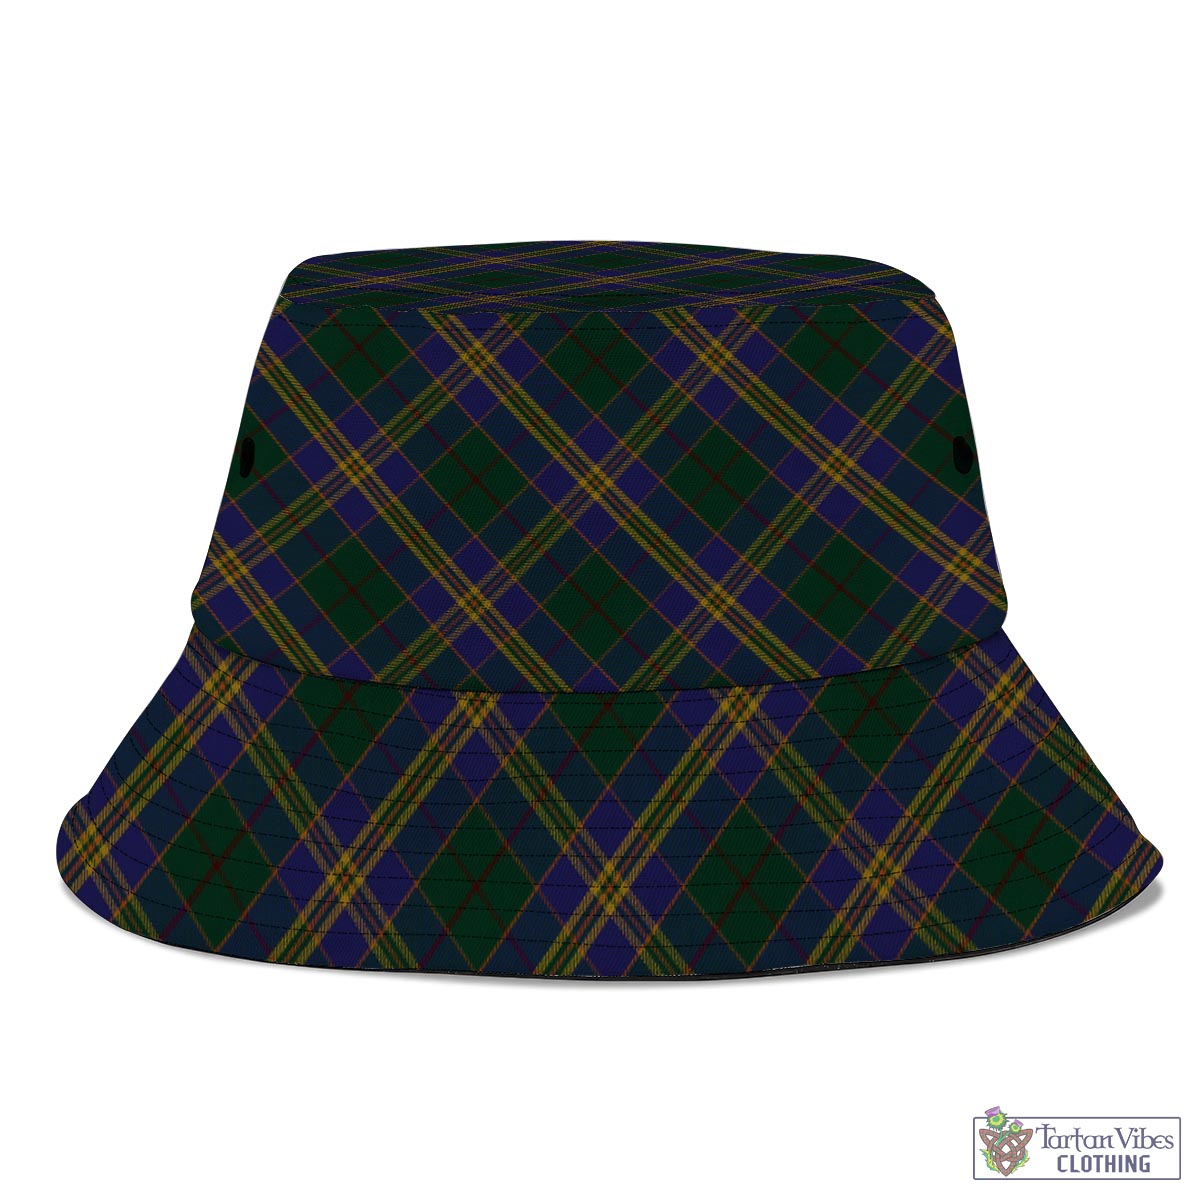 Tartan Vibes Clothing Kilkenny County Ireland Tartan Bucket Hat